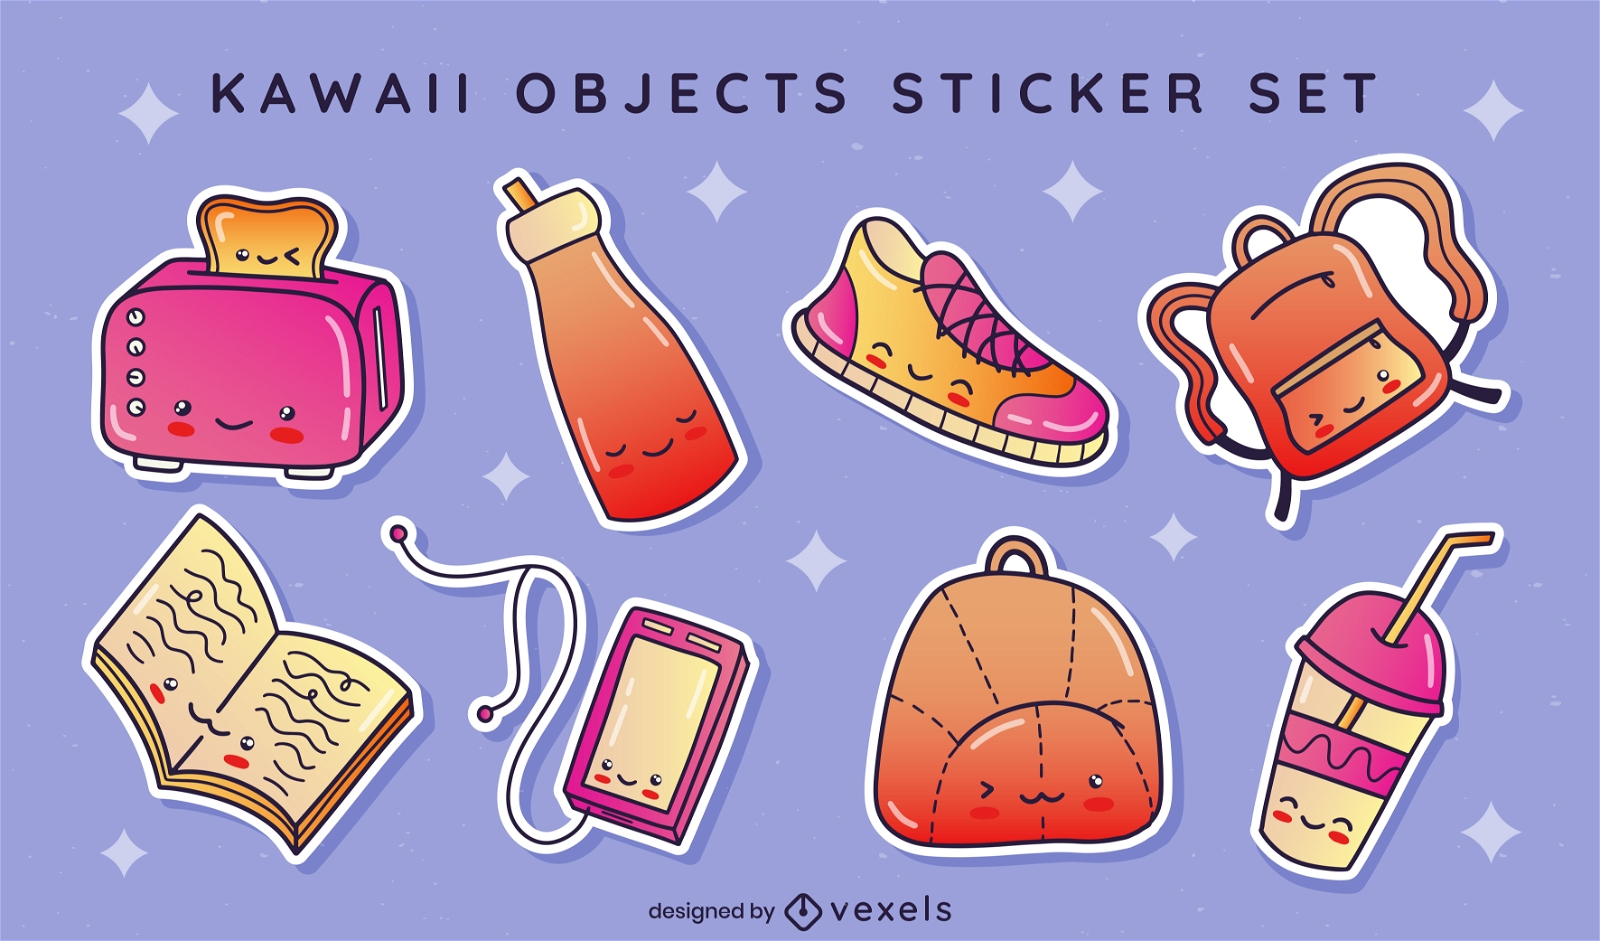 Kawaii-Objekte-Sticker-Set